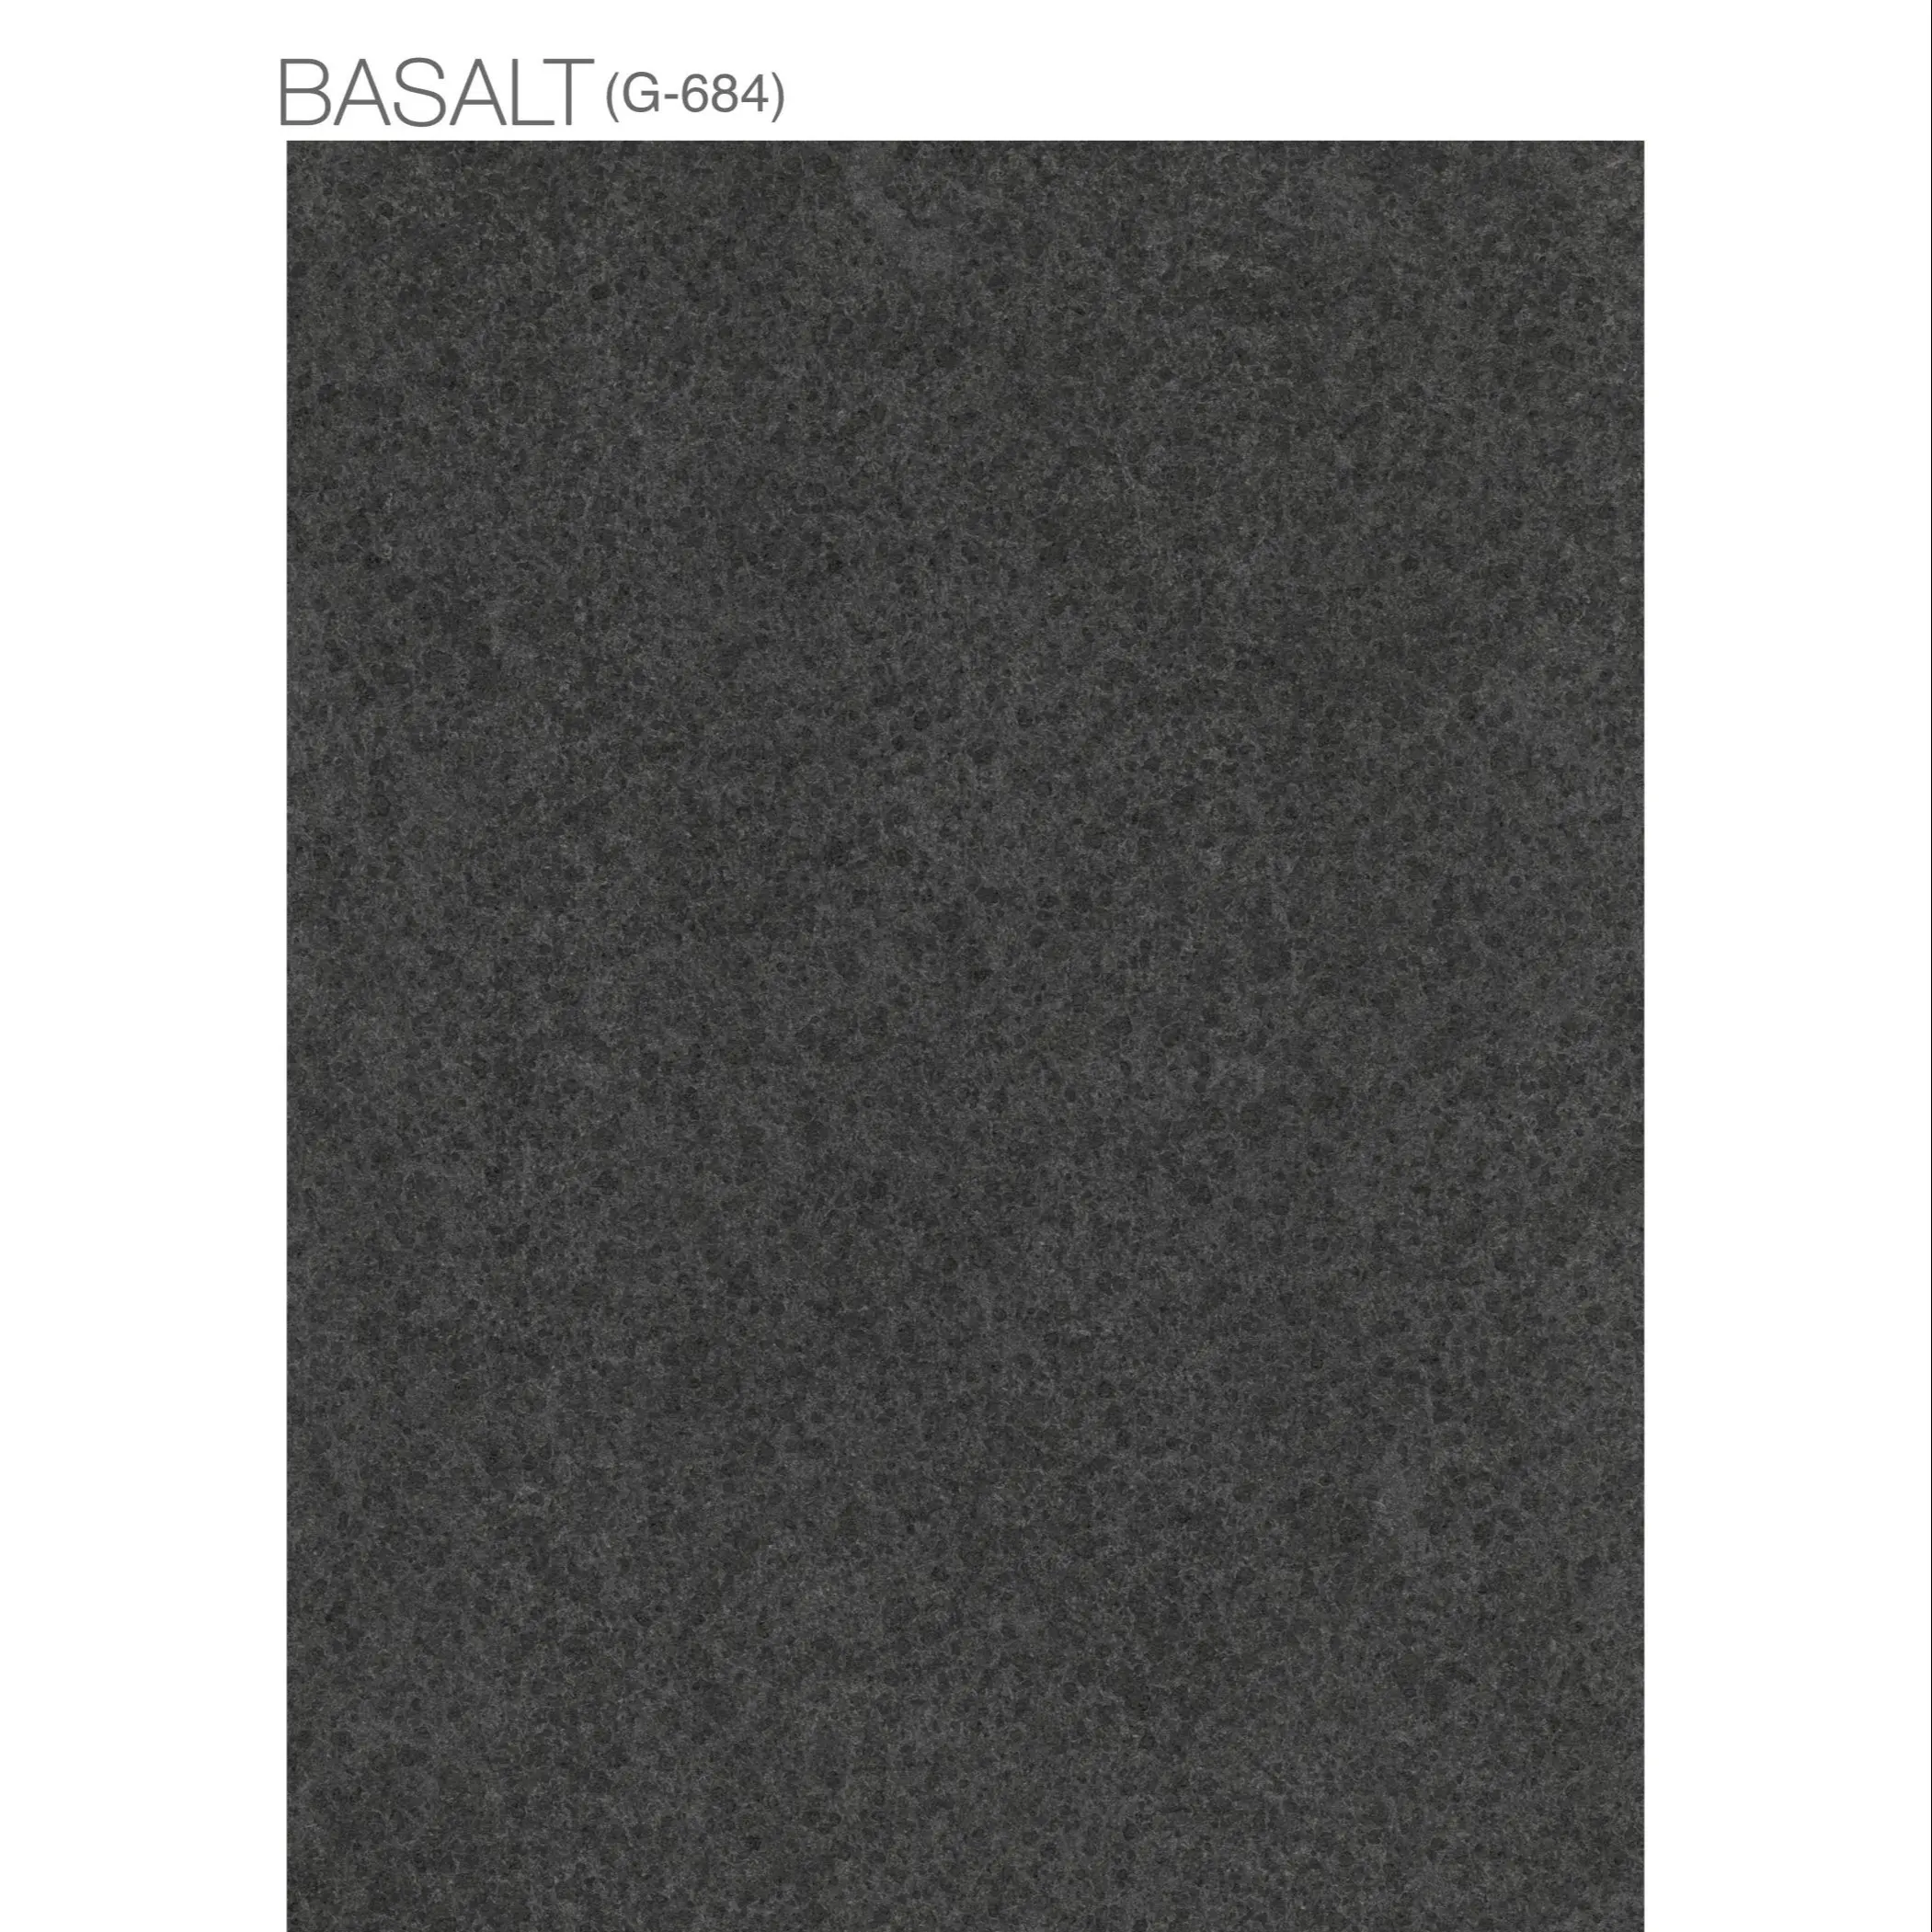 Barato preço r11 superfície 20mm <span class=keywords><strong>basalto</strong></span> 600x900mm, exterior resistente piso porcelana telhas rectificadas para venda na índia